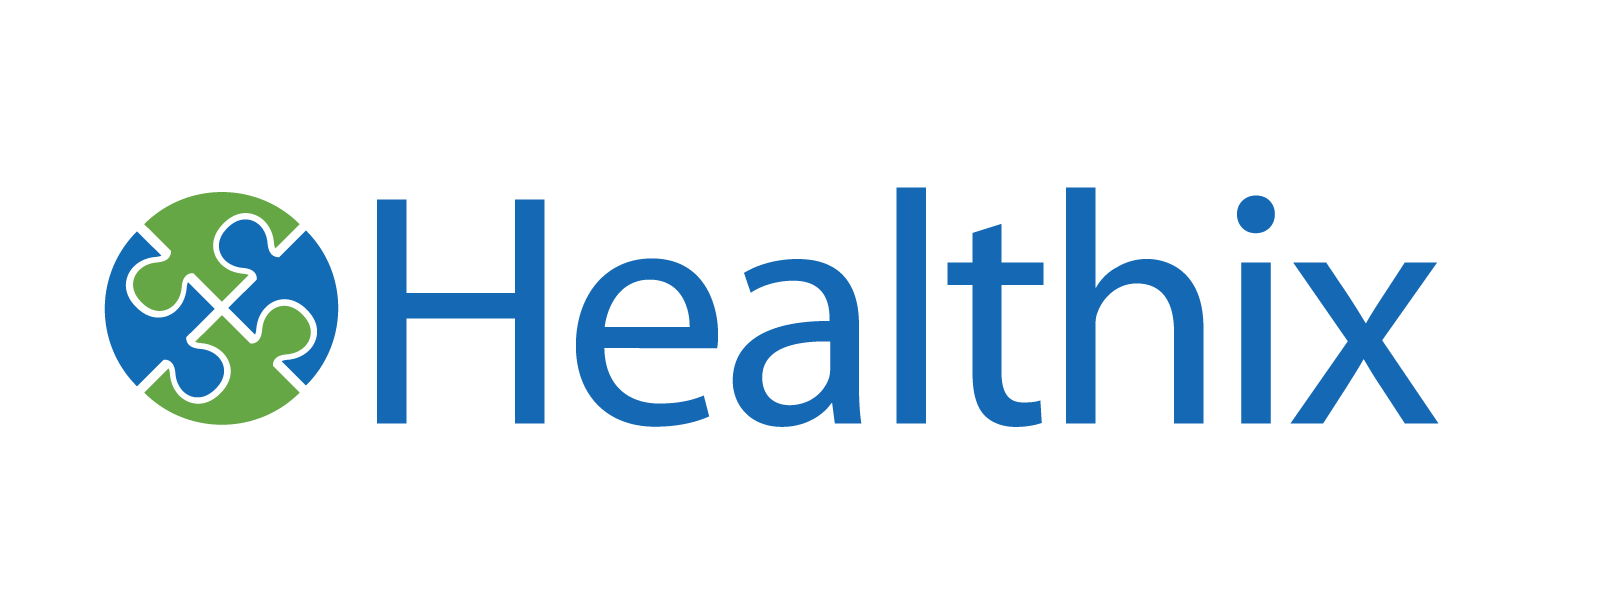 Healthix-logo